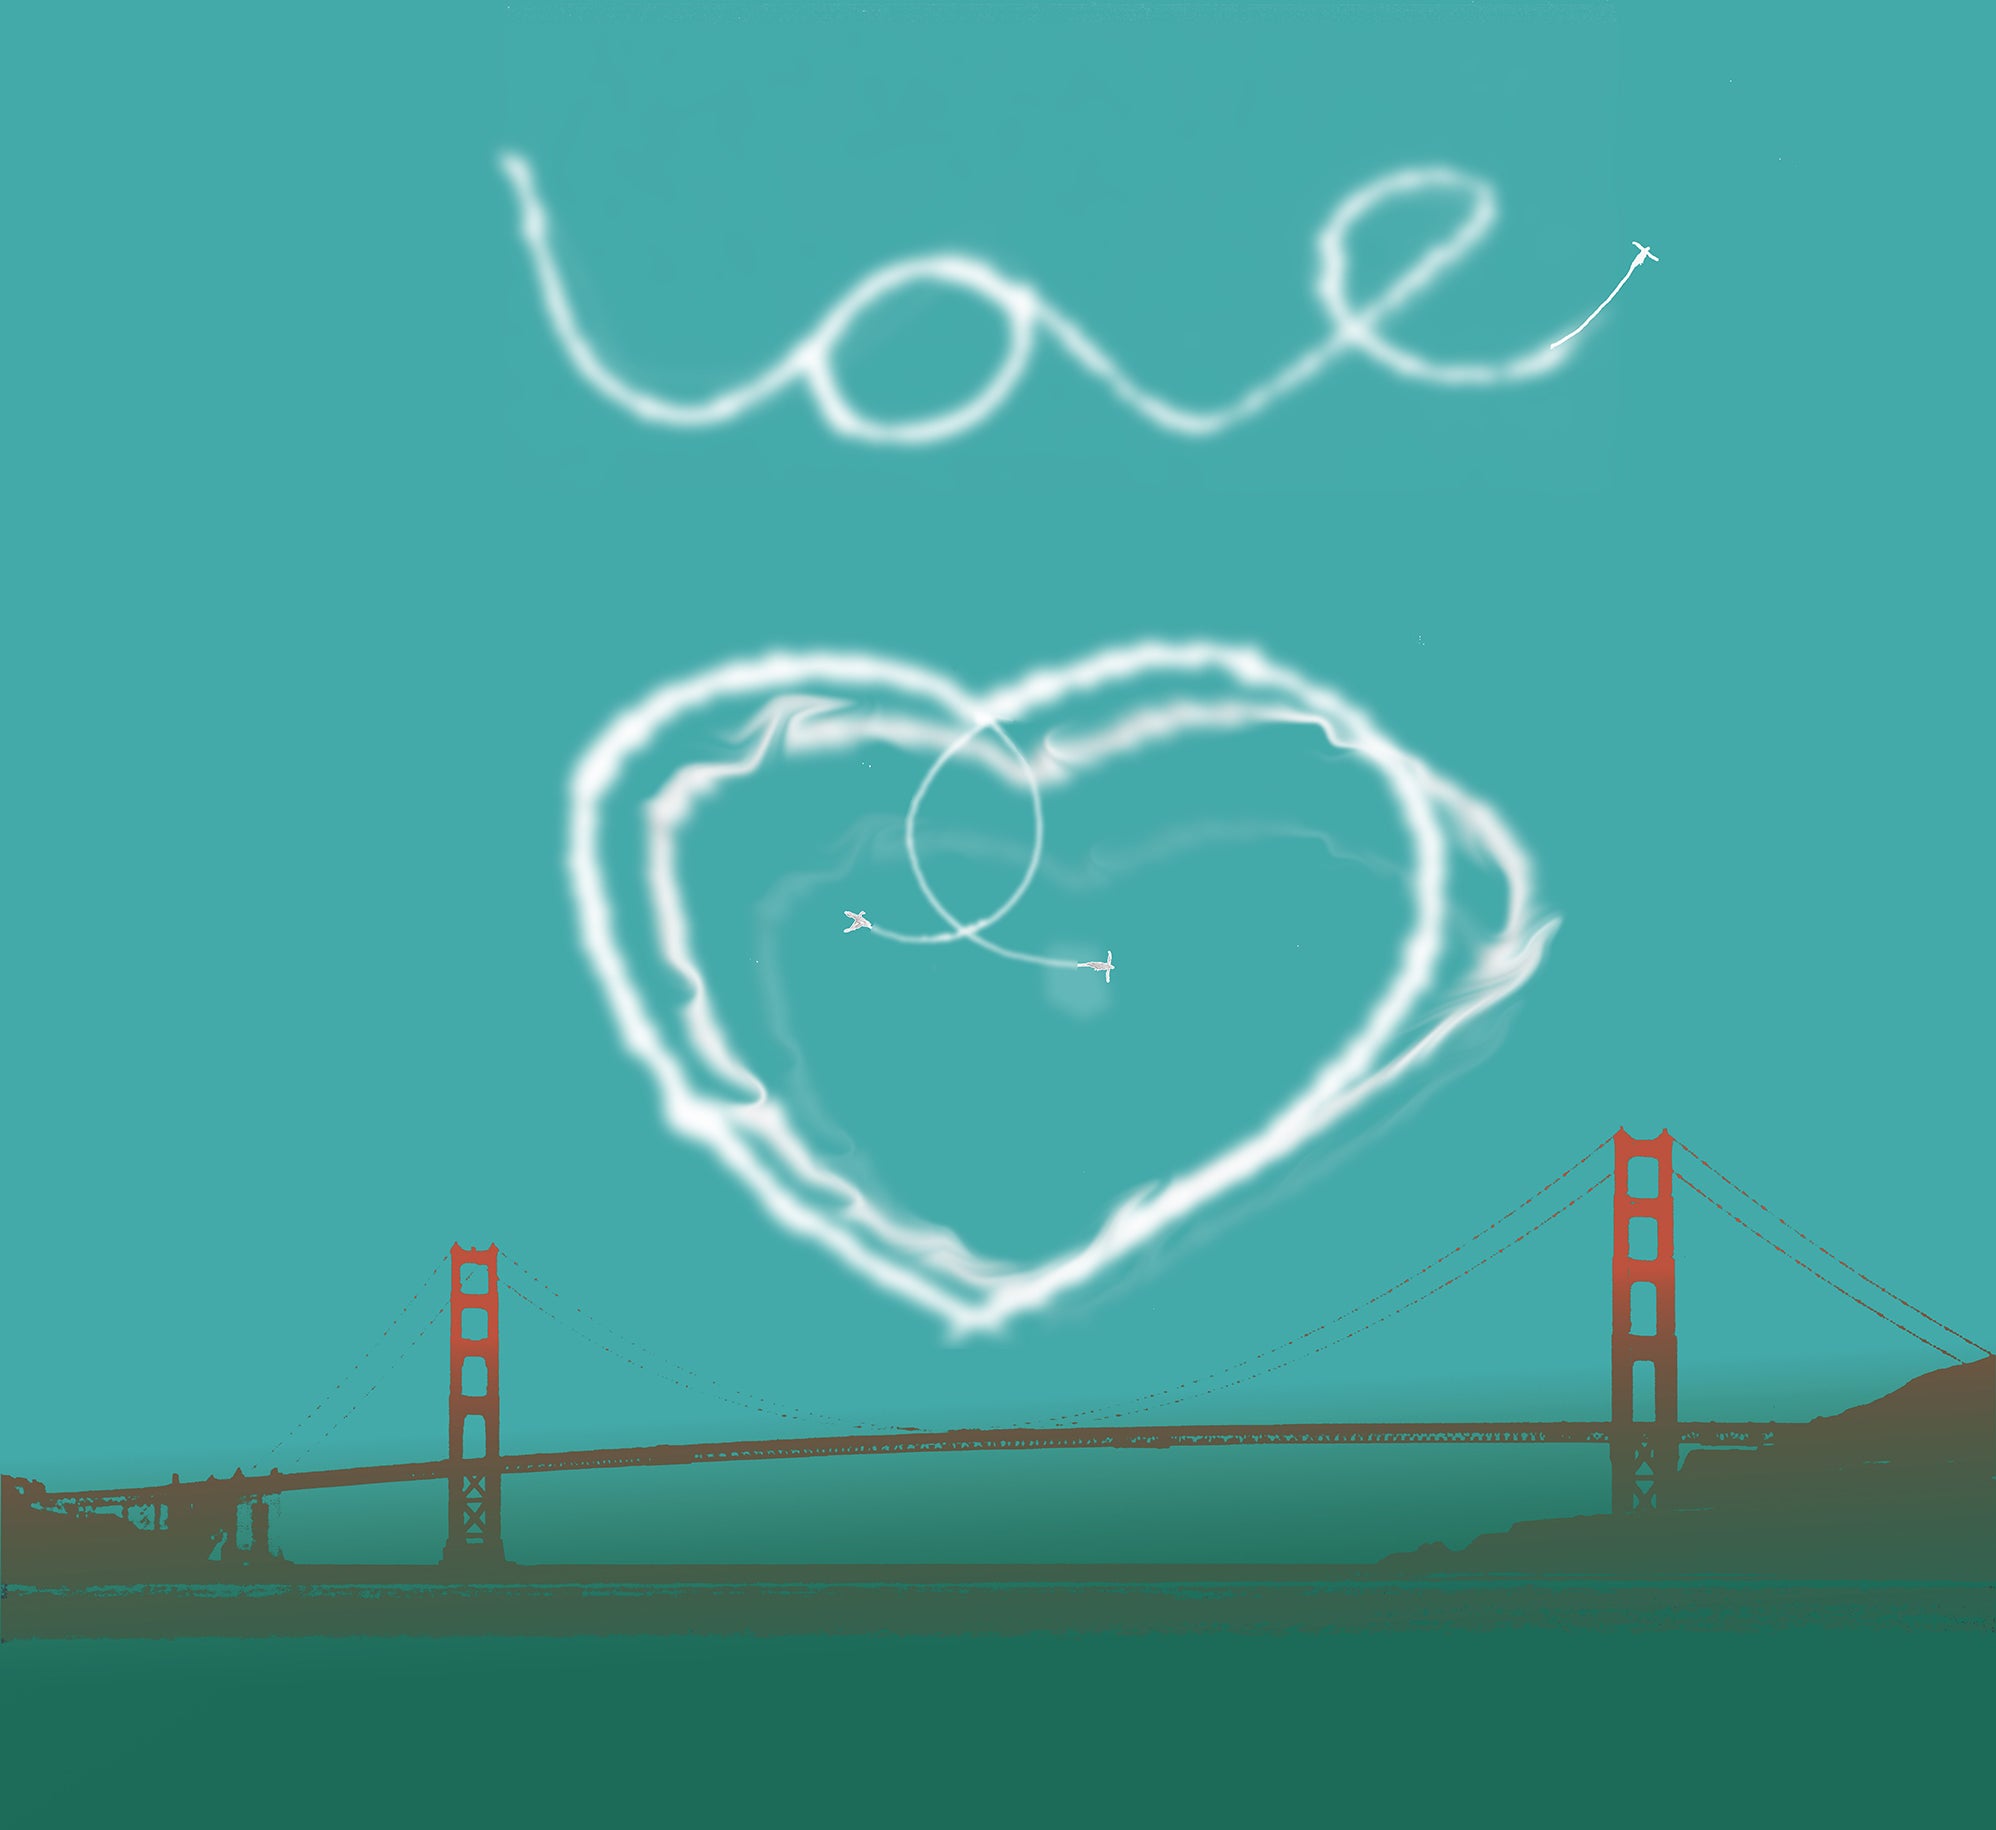 The Heart of San Francisco